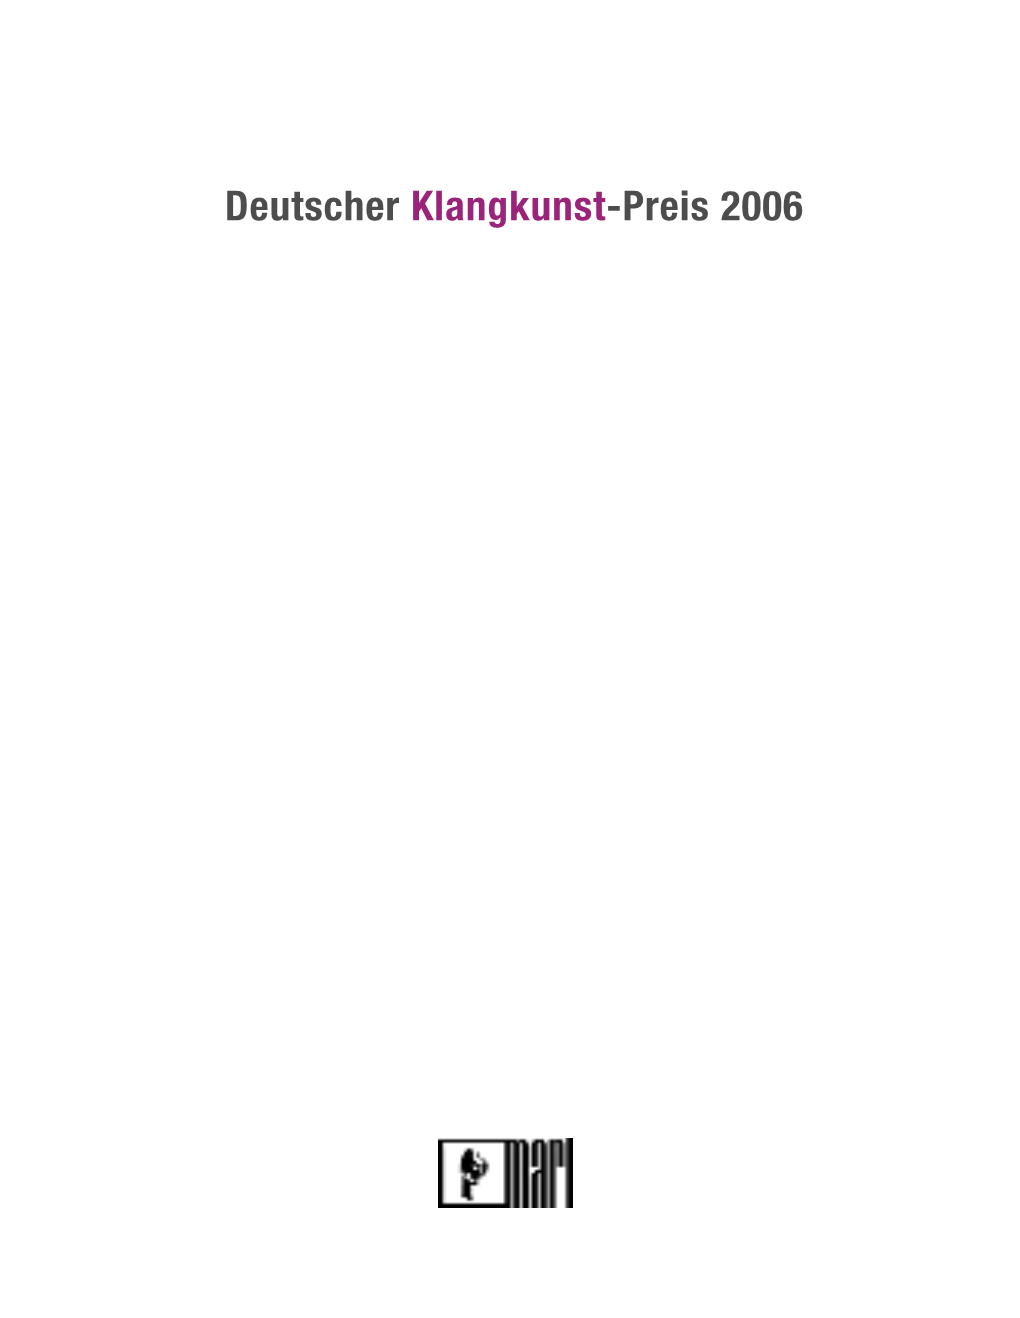 Deutscher Klangkunst-Preis 2006 Marler Kkunst Kat06.Qxd 11.10.2006 11:42 Uhr Seite 2